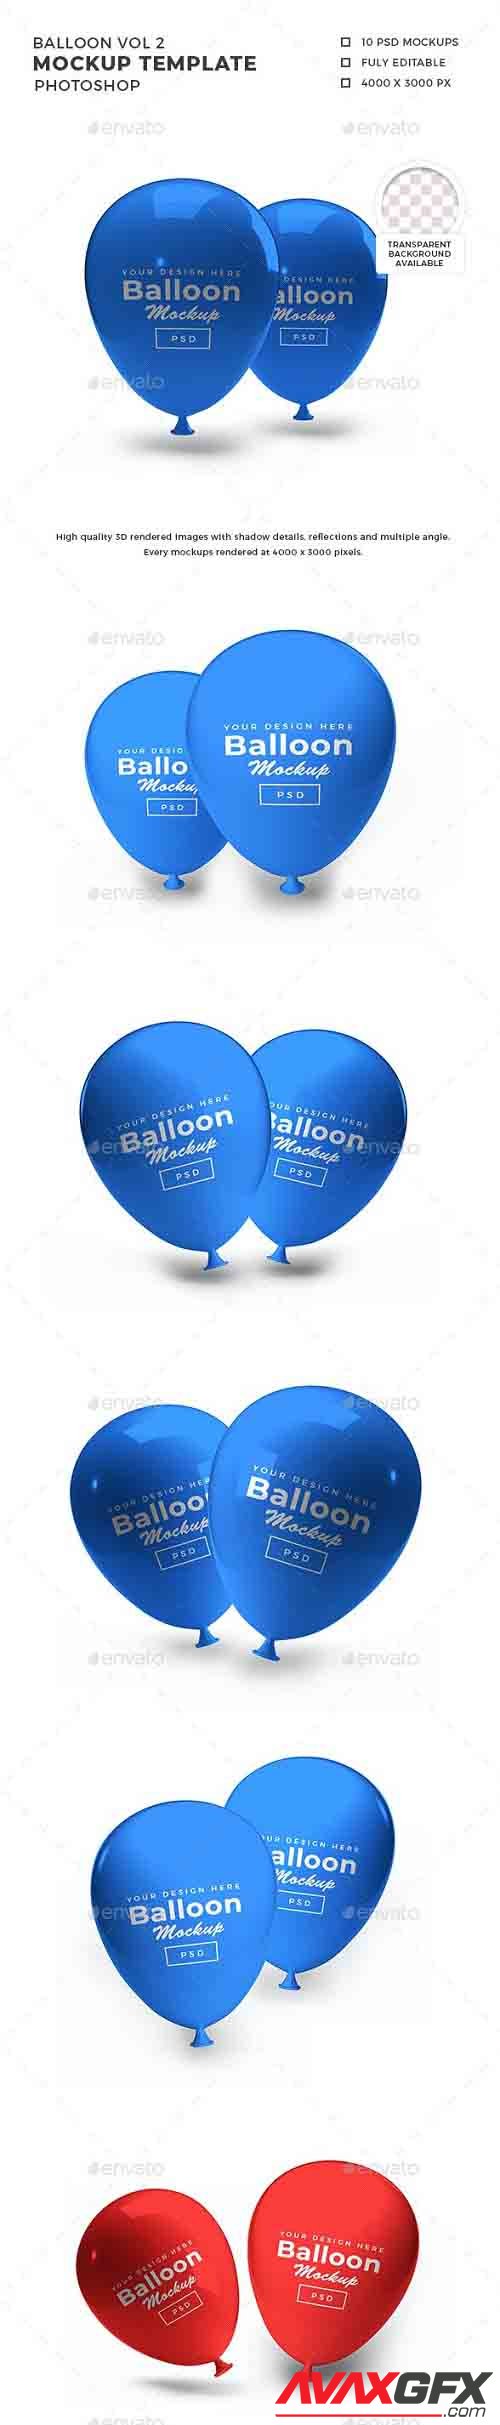 Balloon 3D Mockup Template Vol 2 - 32380478 - 1393201